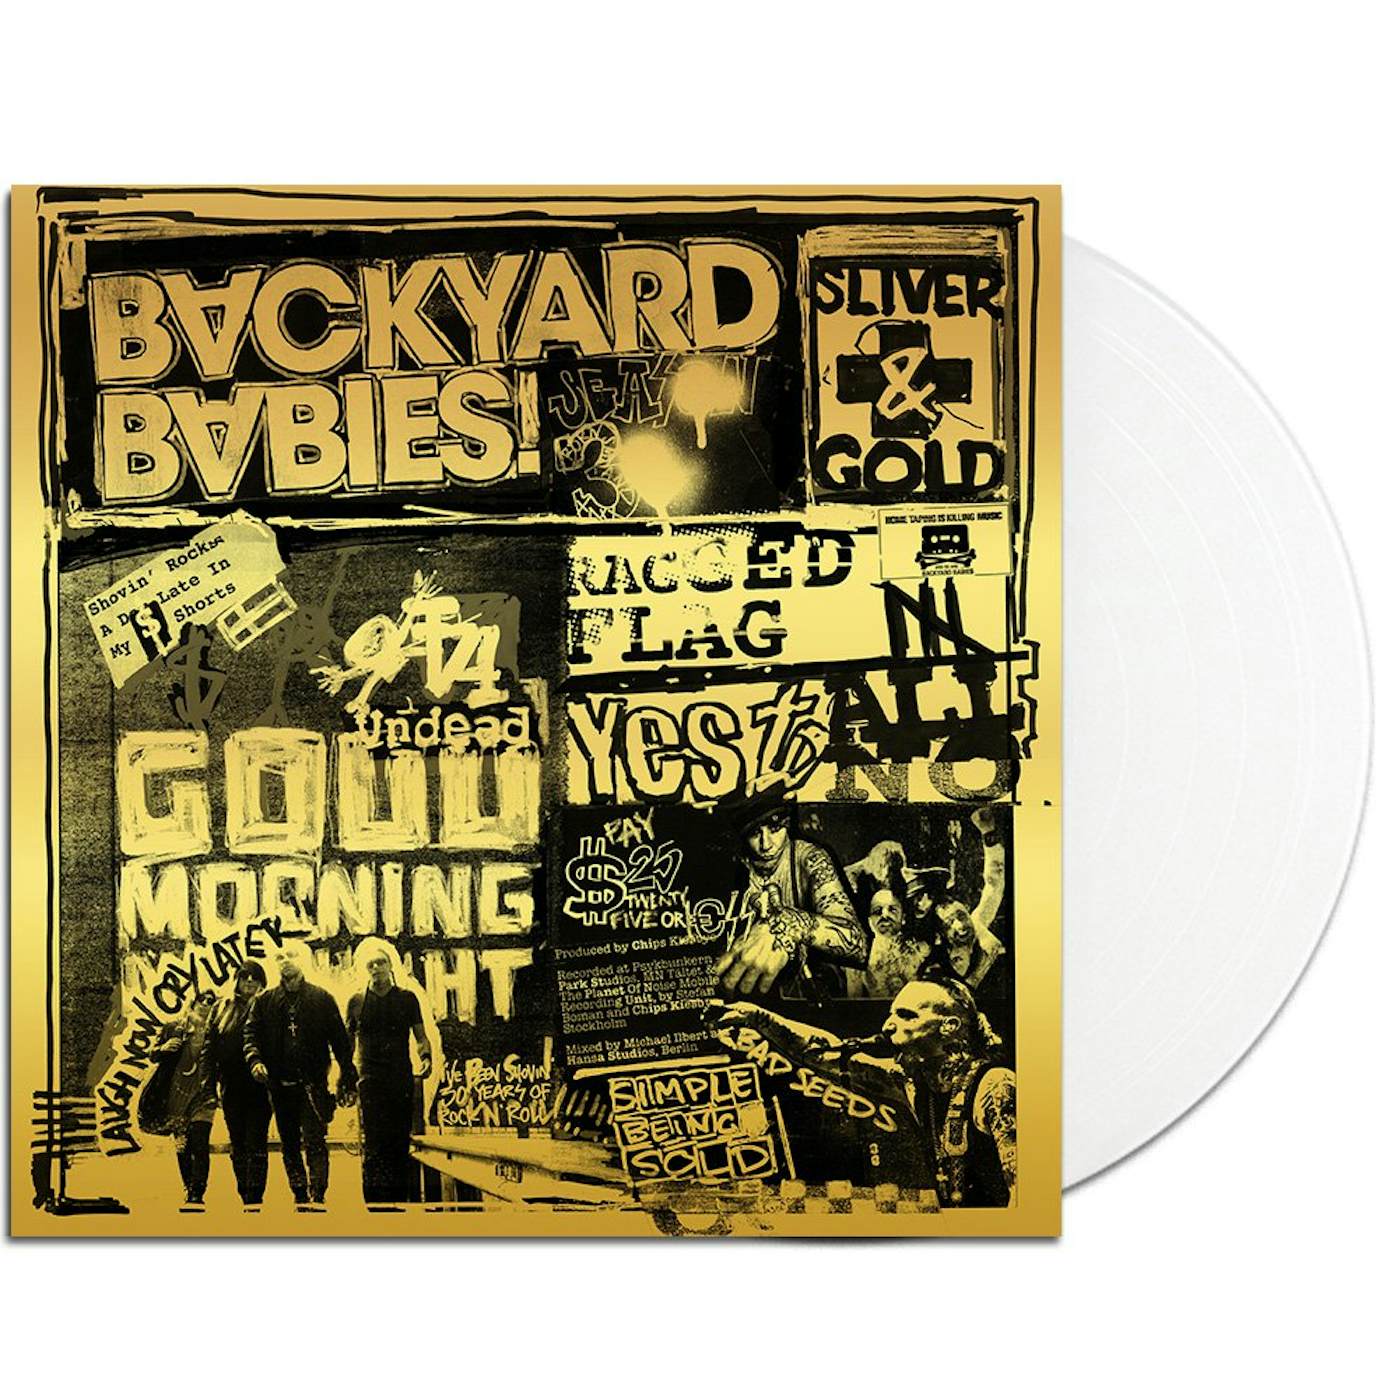 Backyard Babies Sliver & Gold LP (White) (Vinyl)